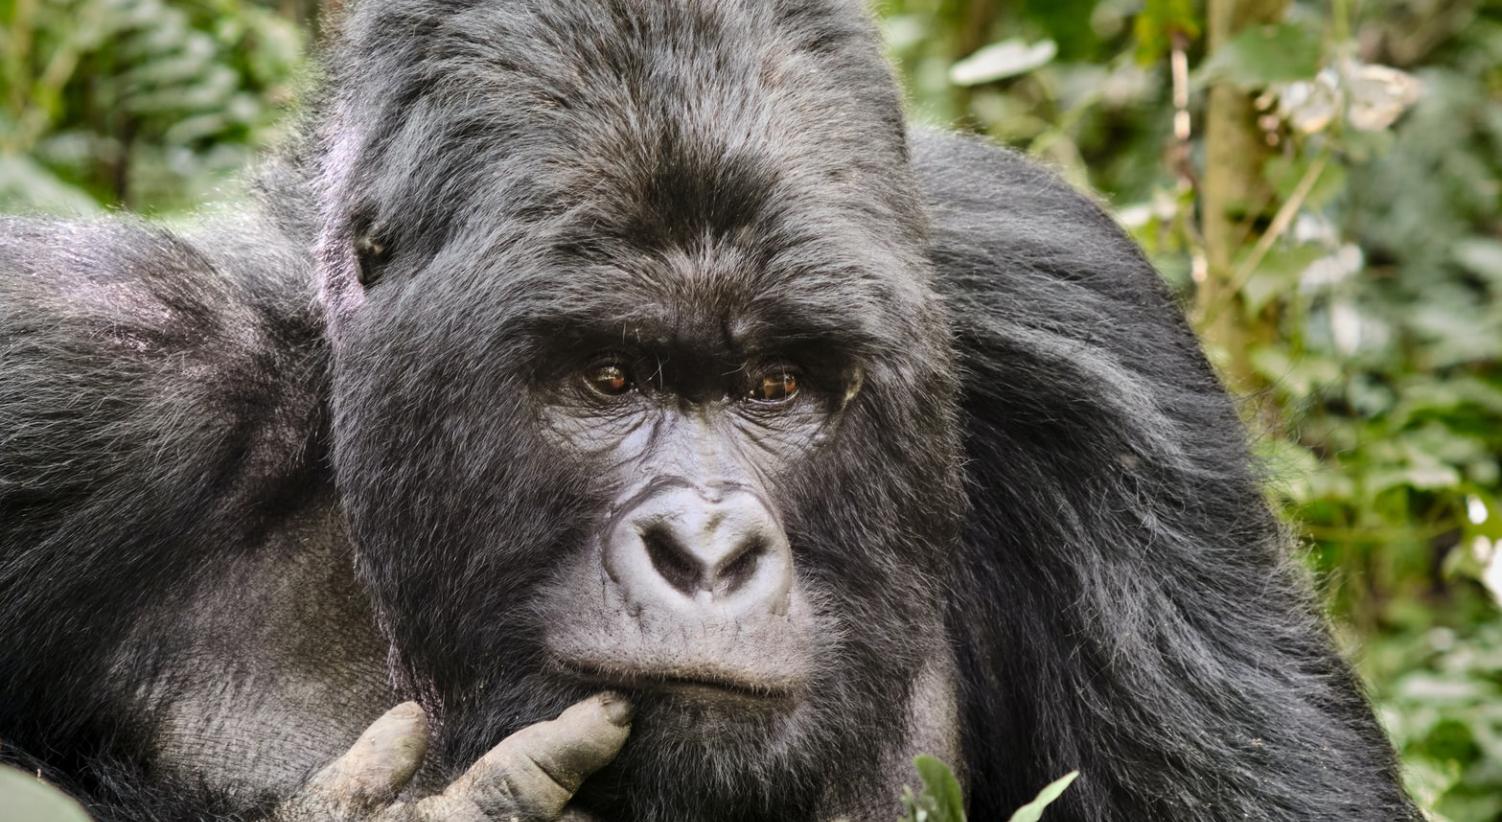 Uganda o Ruanda? Parliamo di gorilla tracking!